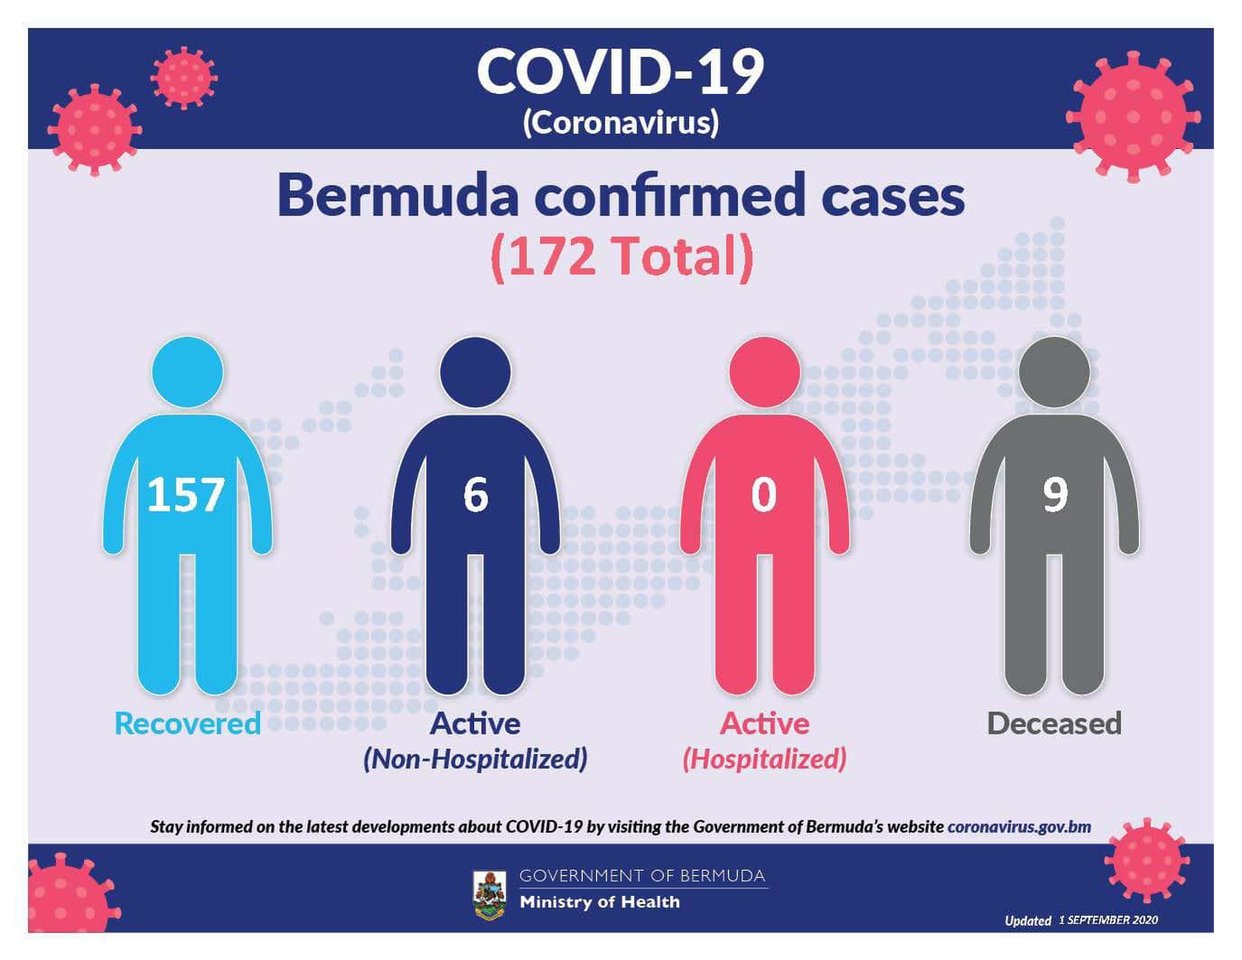 No new COVID-19 cases reported in Bermuda, 1 Sept